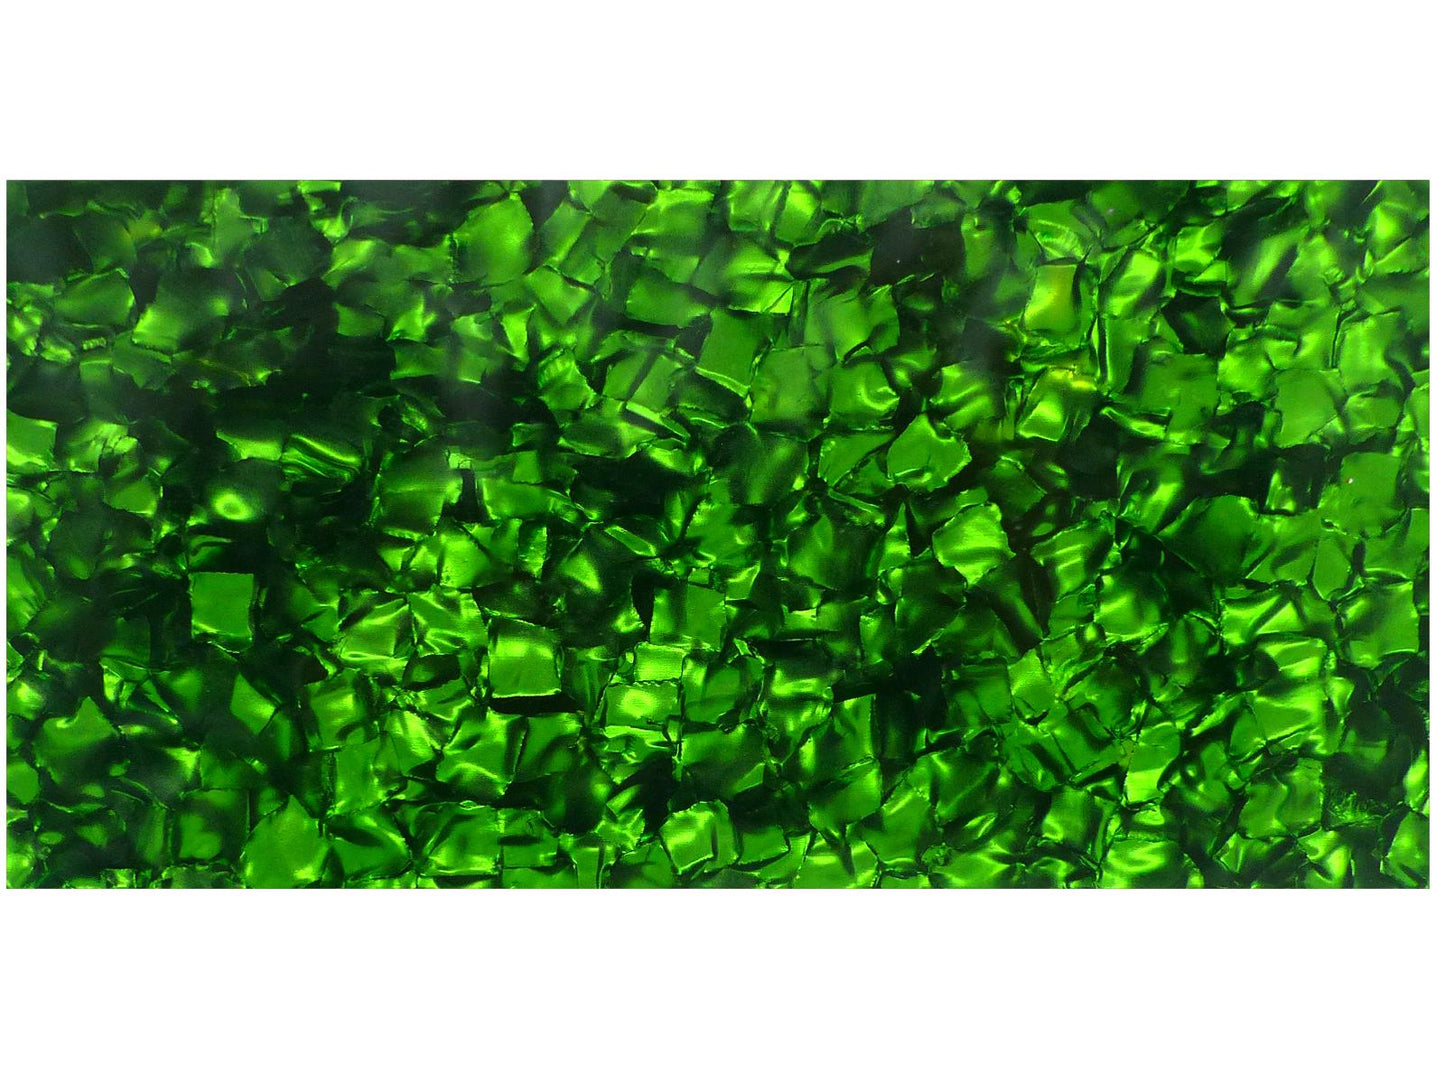 Incudo Green Pearloid Celluloid Sheet - 200x100x0.46mm (7.9x3.94x0.02")